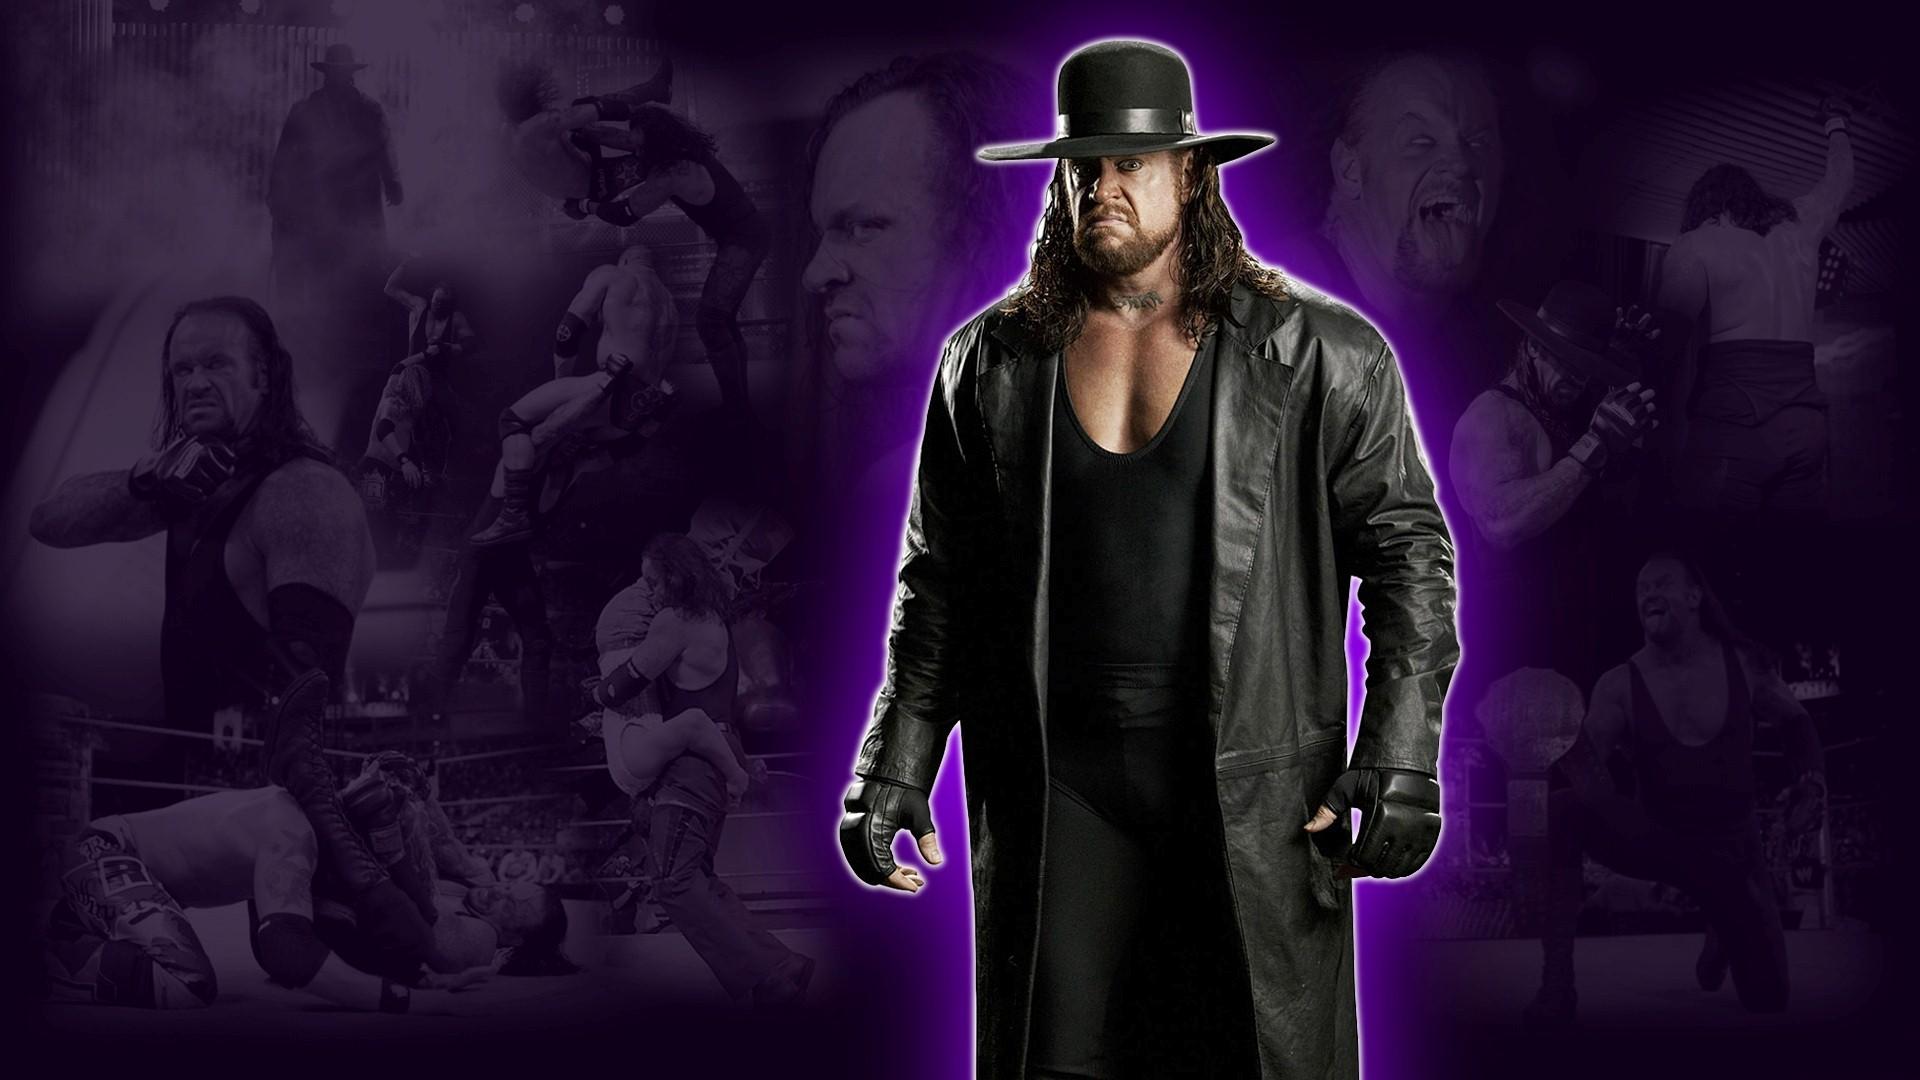 Download 1920x1080 The Undertaker WWE Wrestler HD Wallpaper